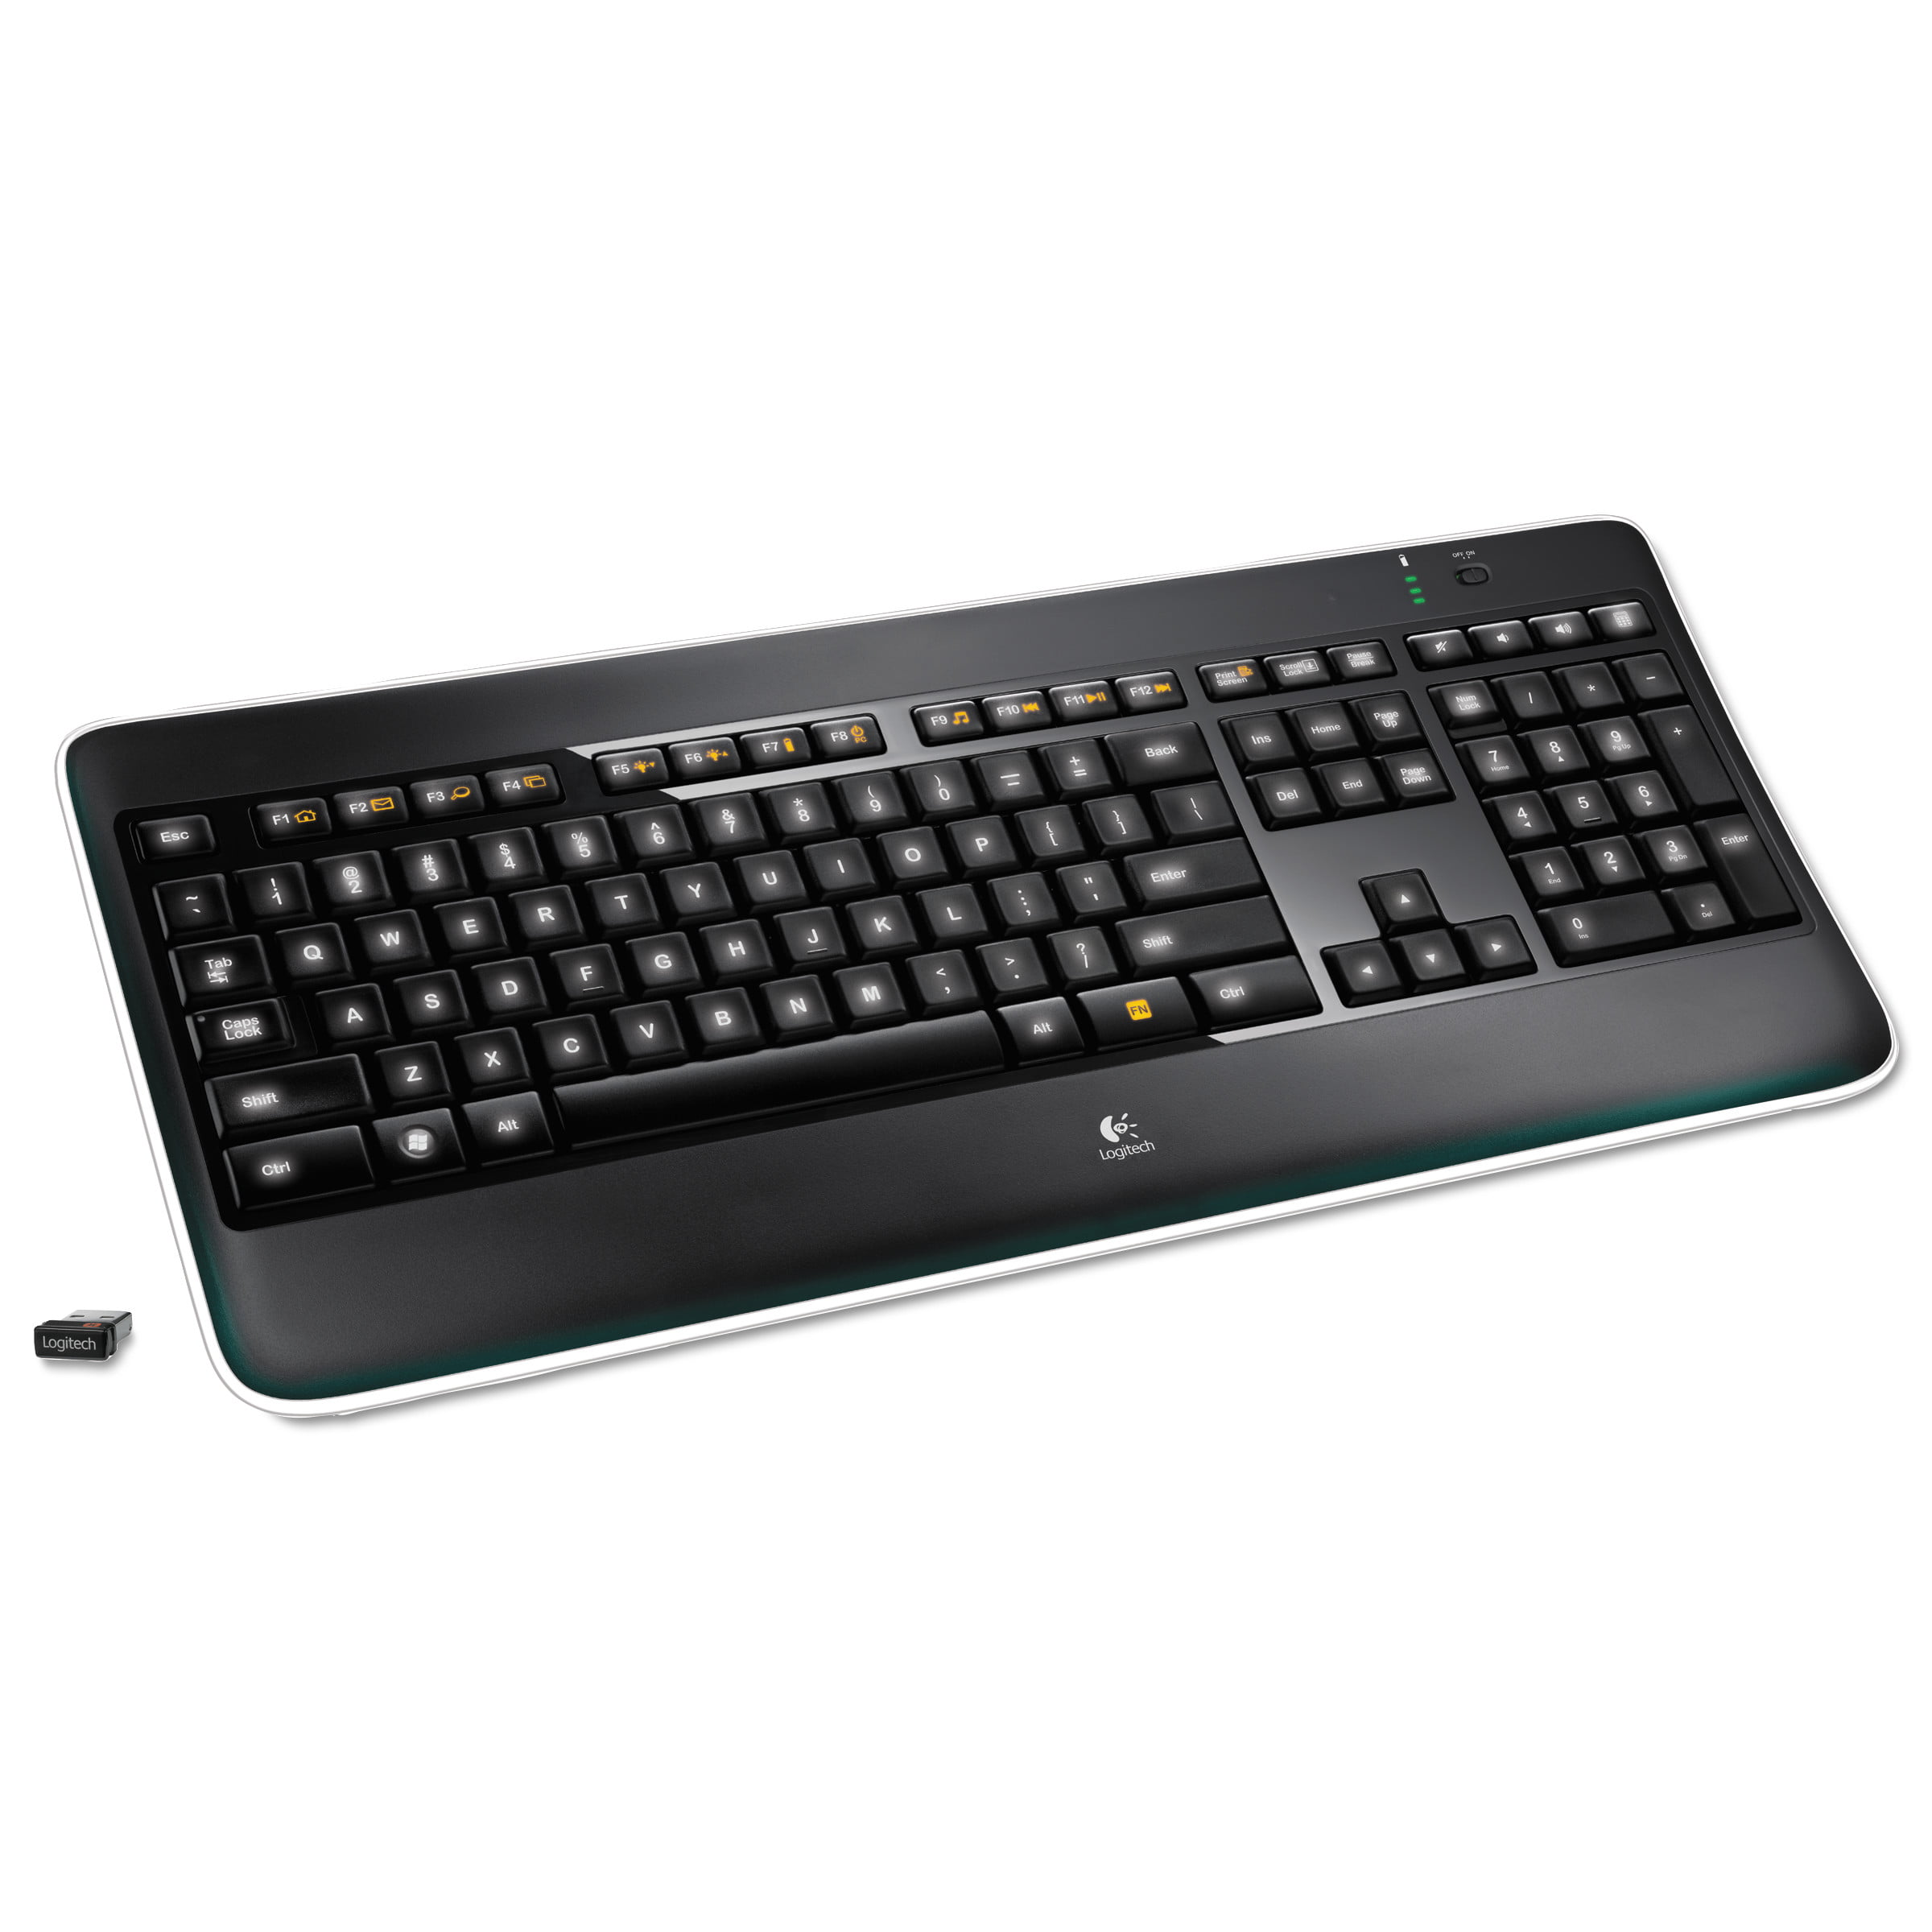 Sig til side Mediate en kop Logitech K800 Illuminated Keyboard, Black - Walmart.com